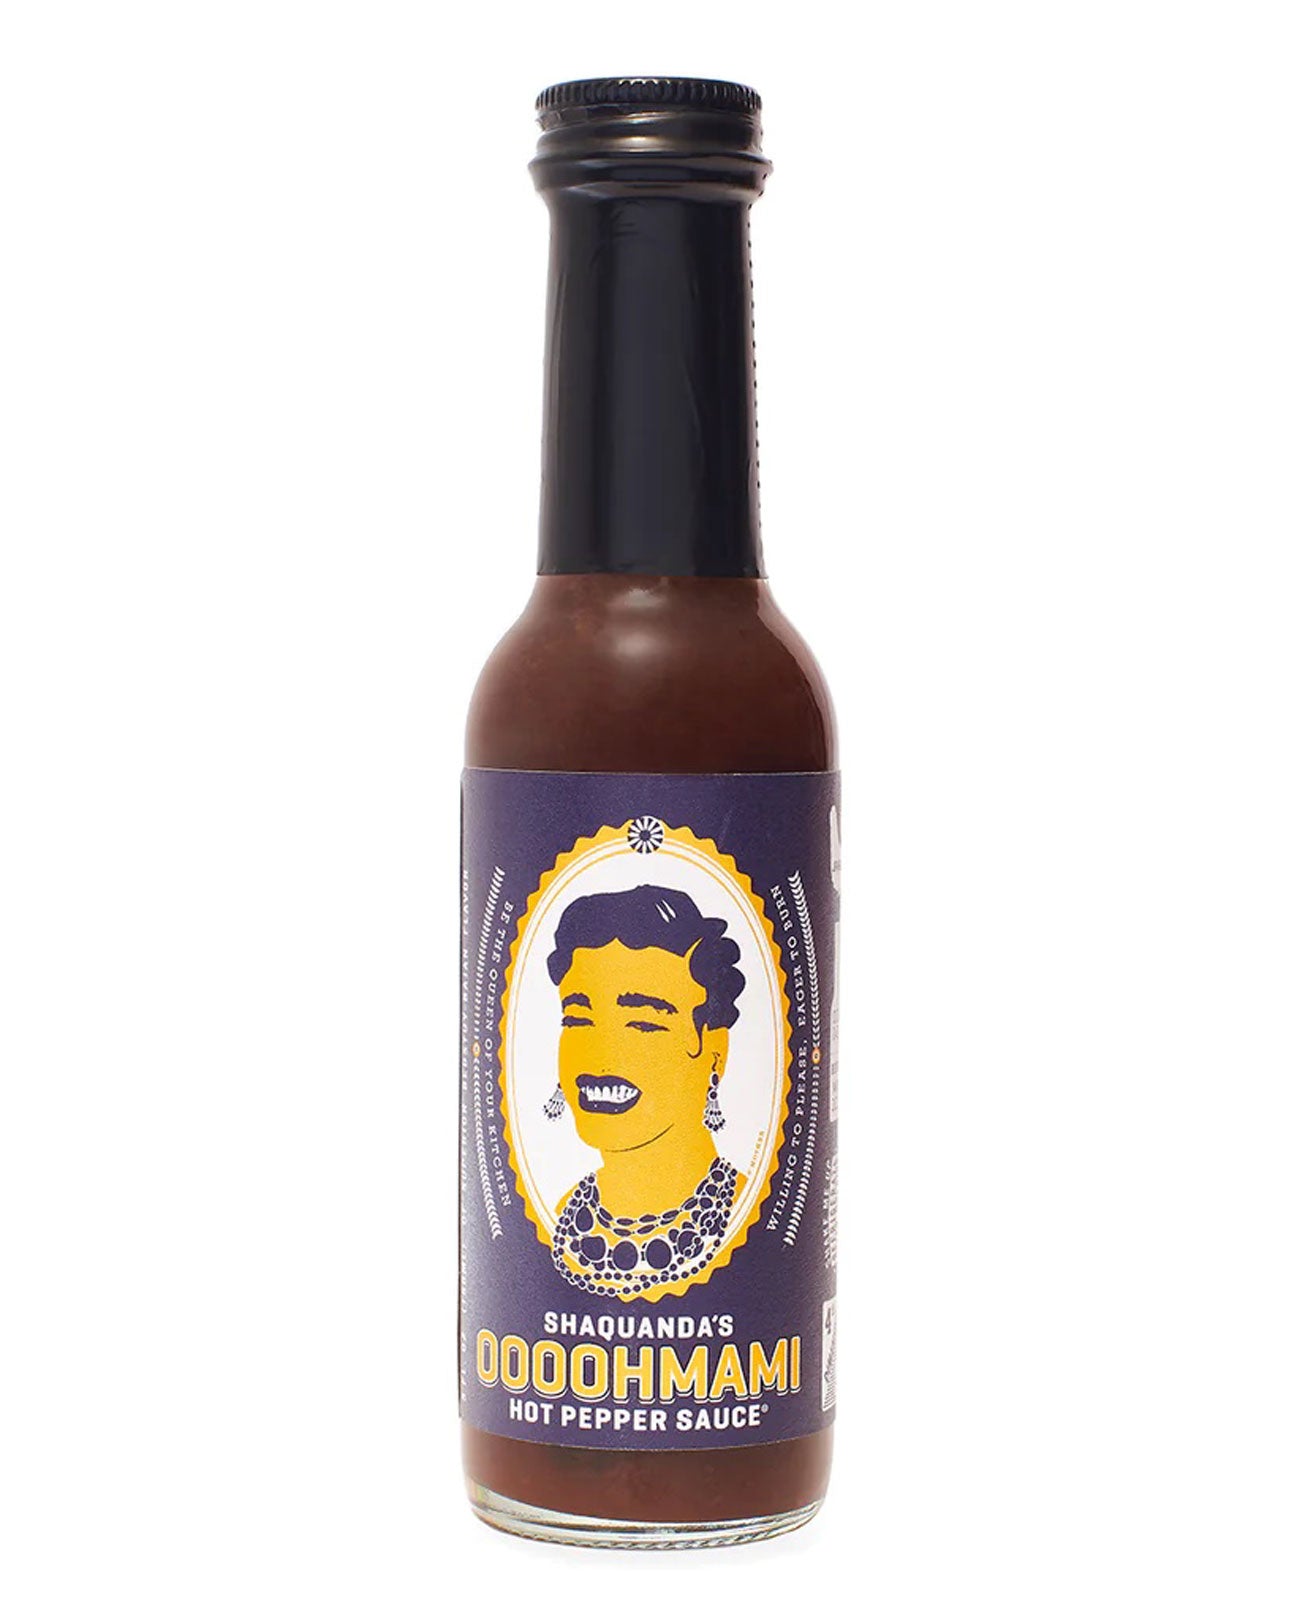 SHAQUANDA'S Oooohmami Hot Sauce